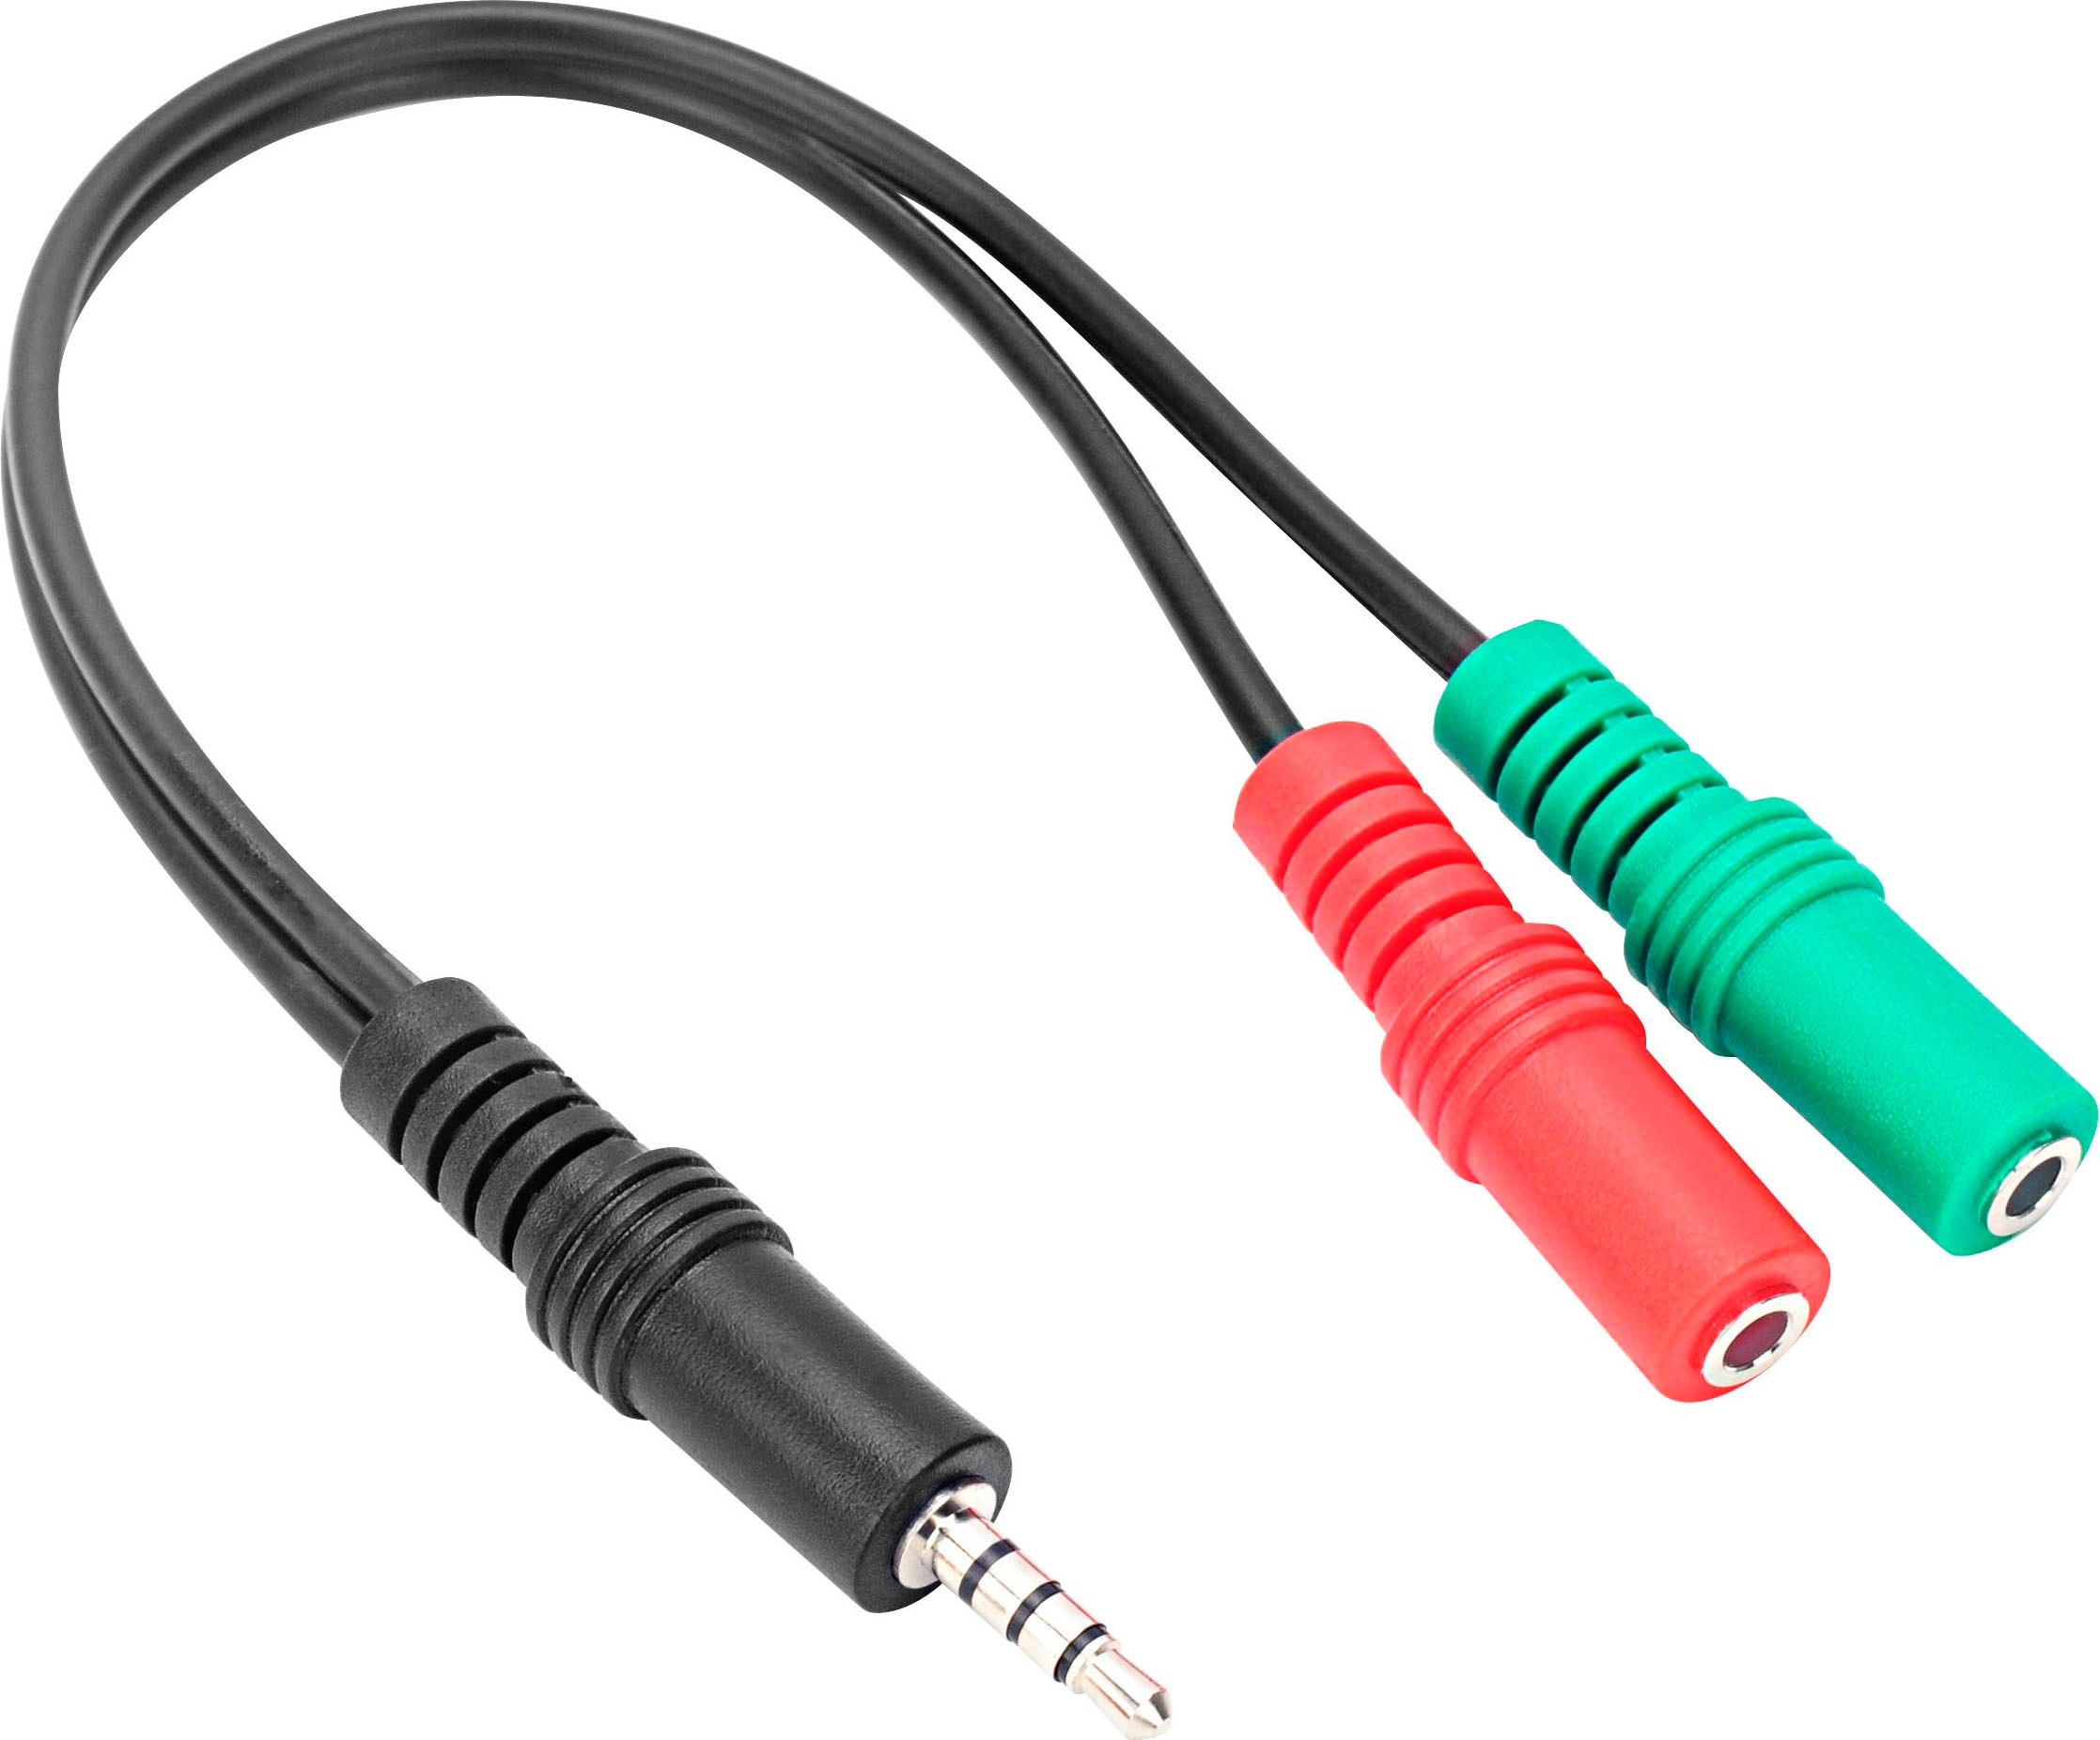 Speedlink Audio-Adapter »TRAX«, für PS4/5 Xbox X/S Nintendo Switch/OLED